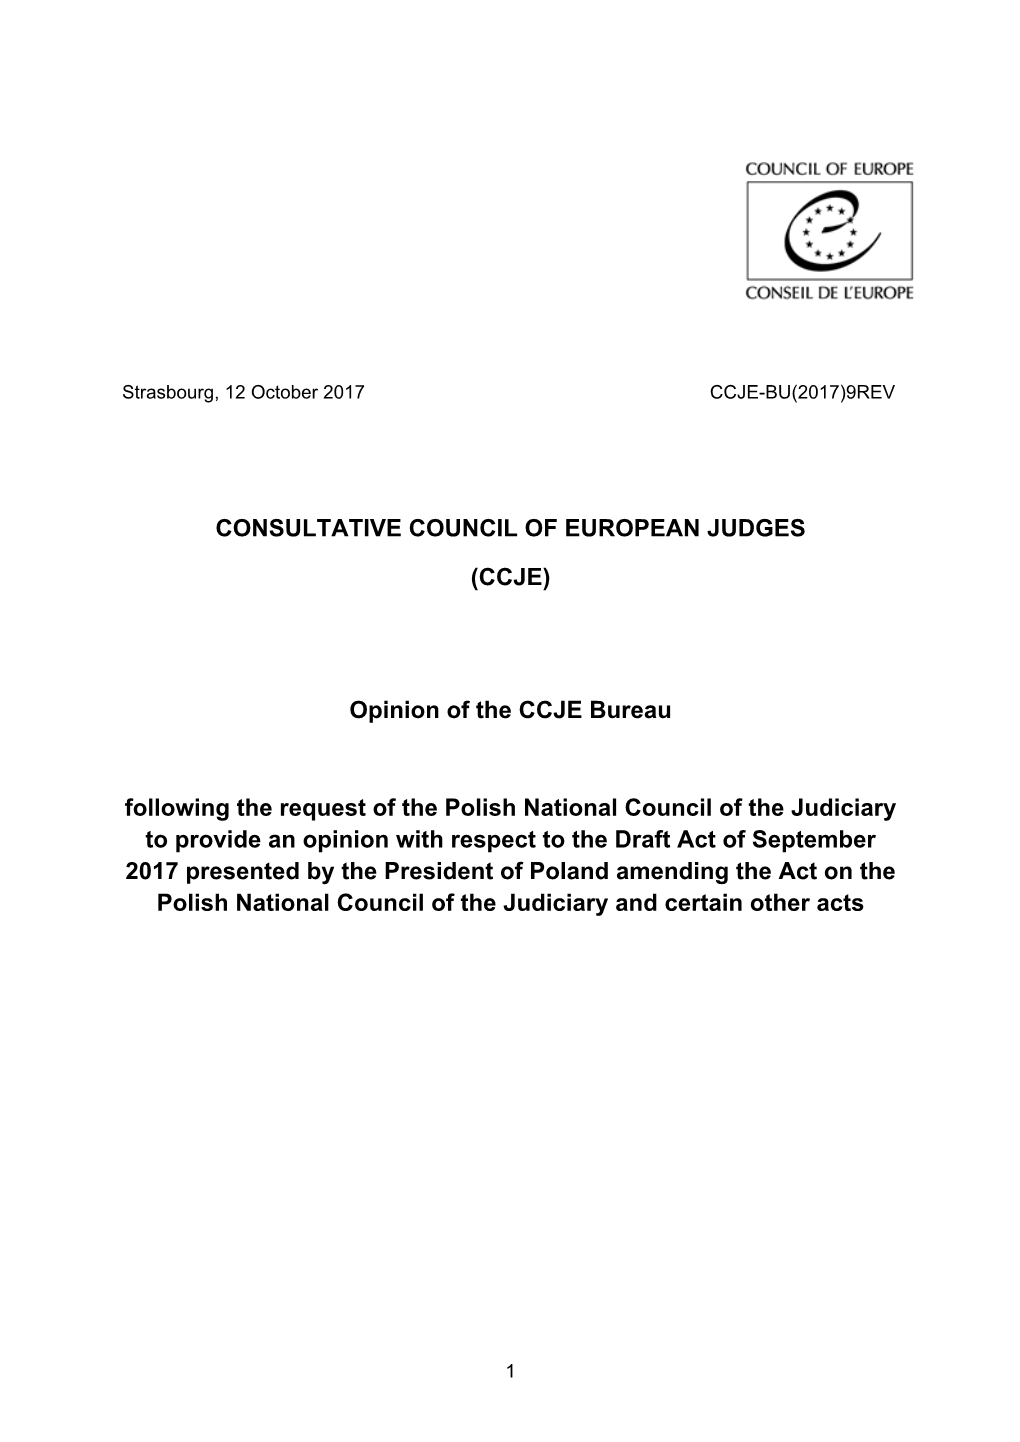 Consultative Council of European Judges (Ccje